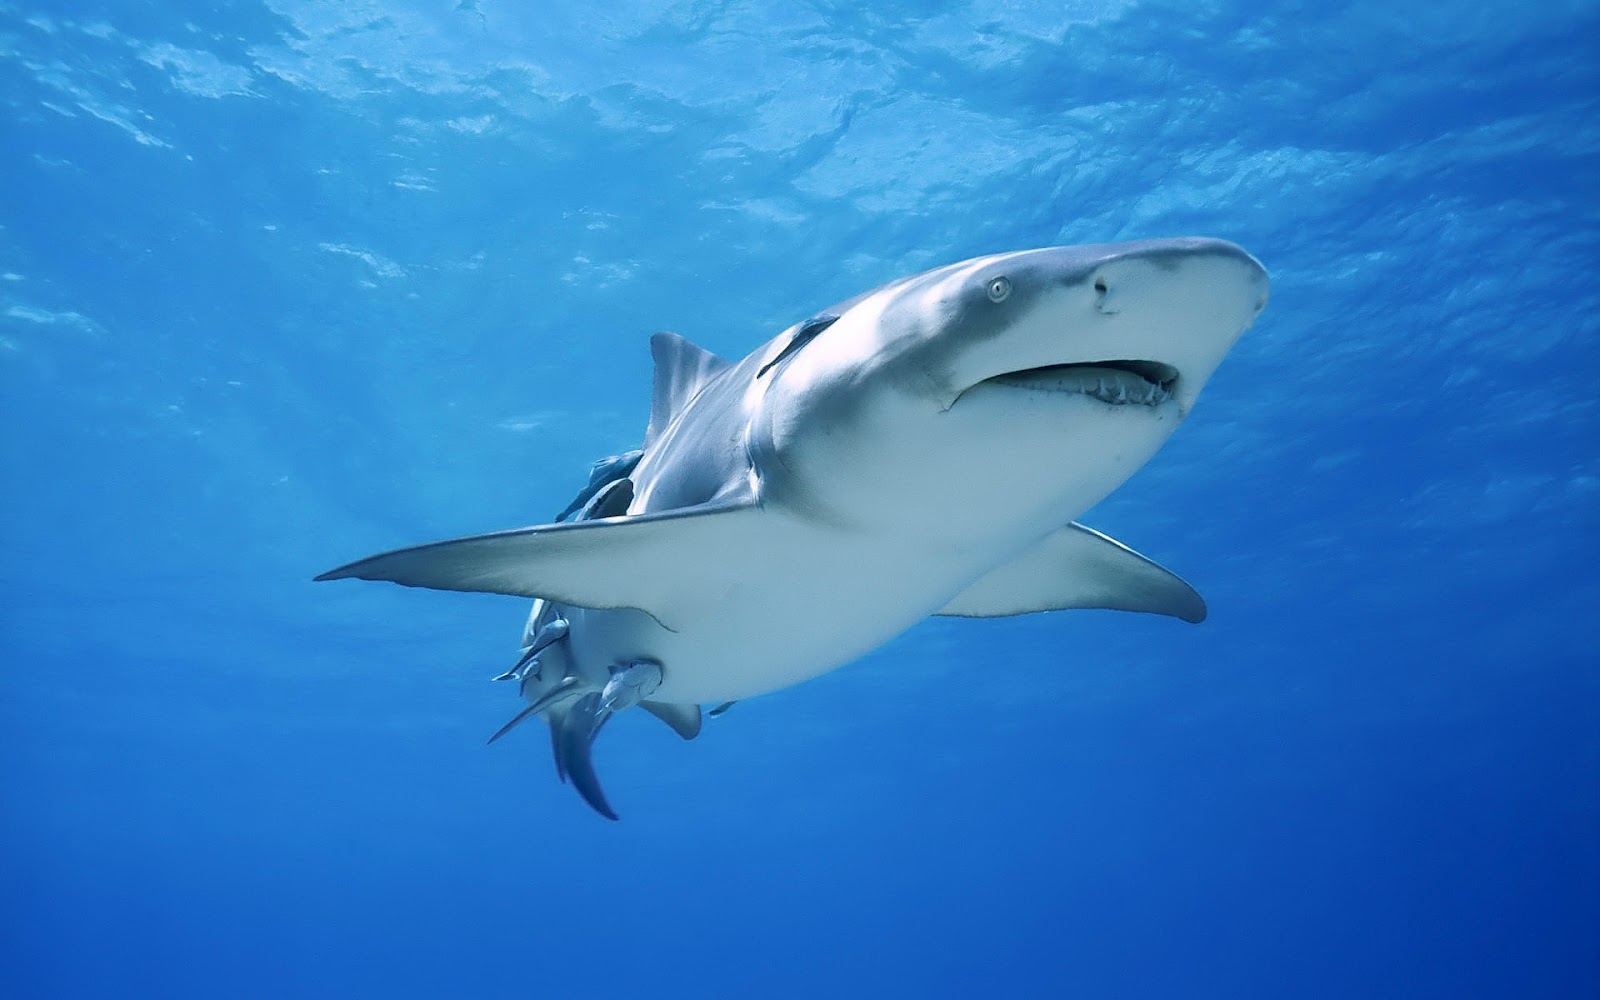 HD Animal Wallpaper Of A Big Shark Swimming In The Blue Sea